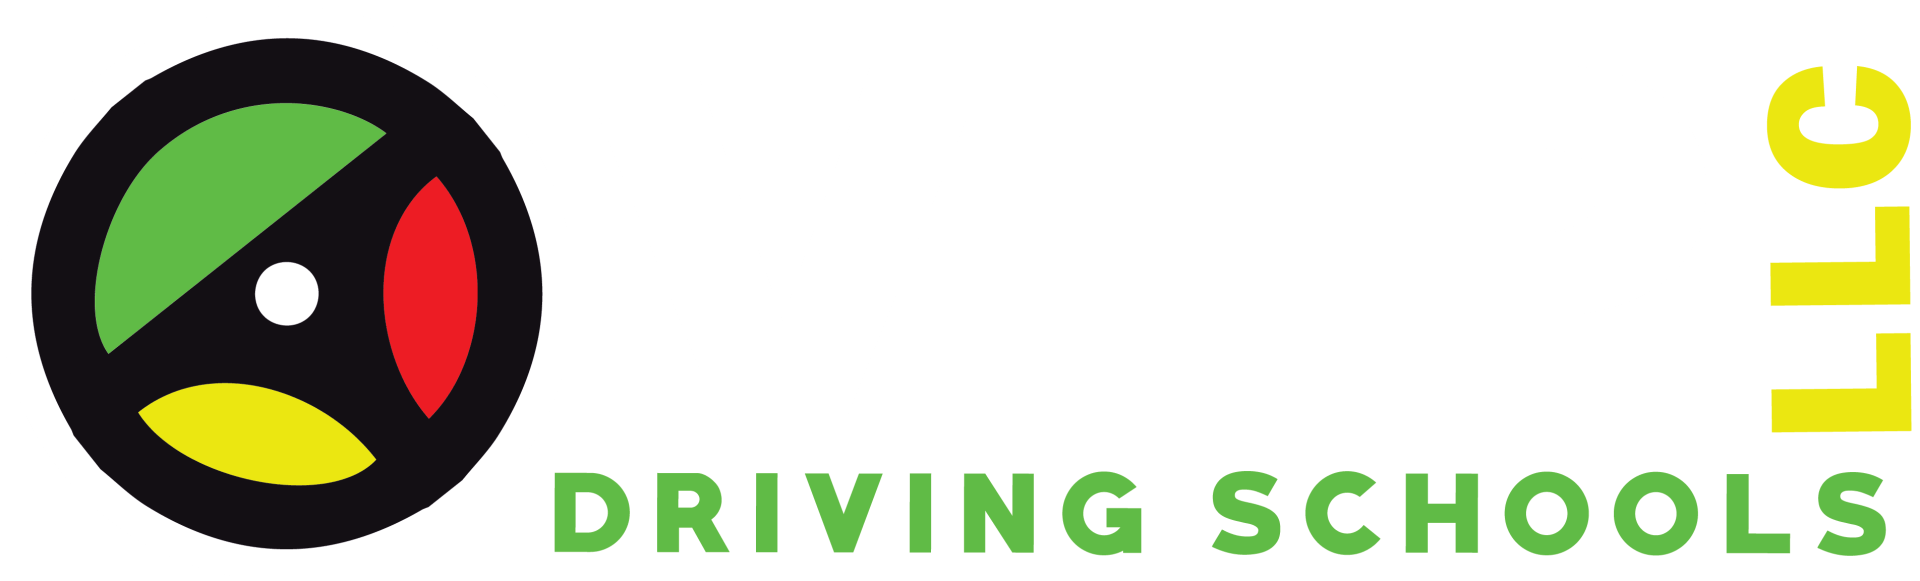 Learn 4 Less Driving School.com LLC logo